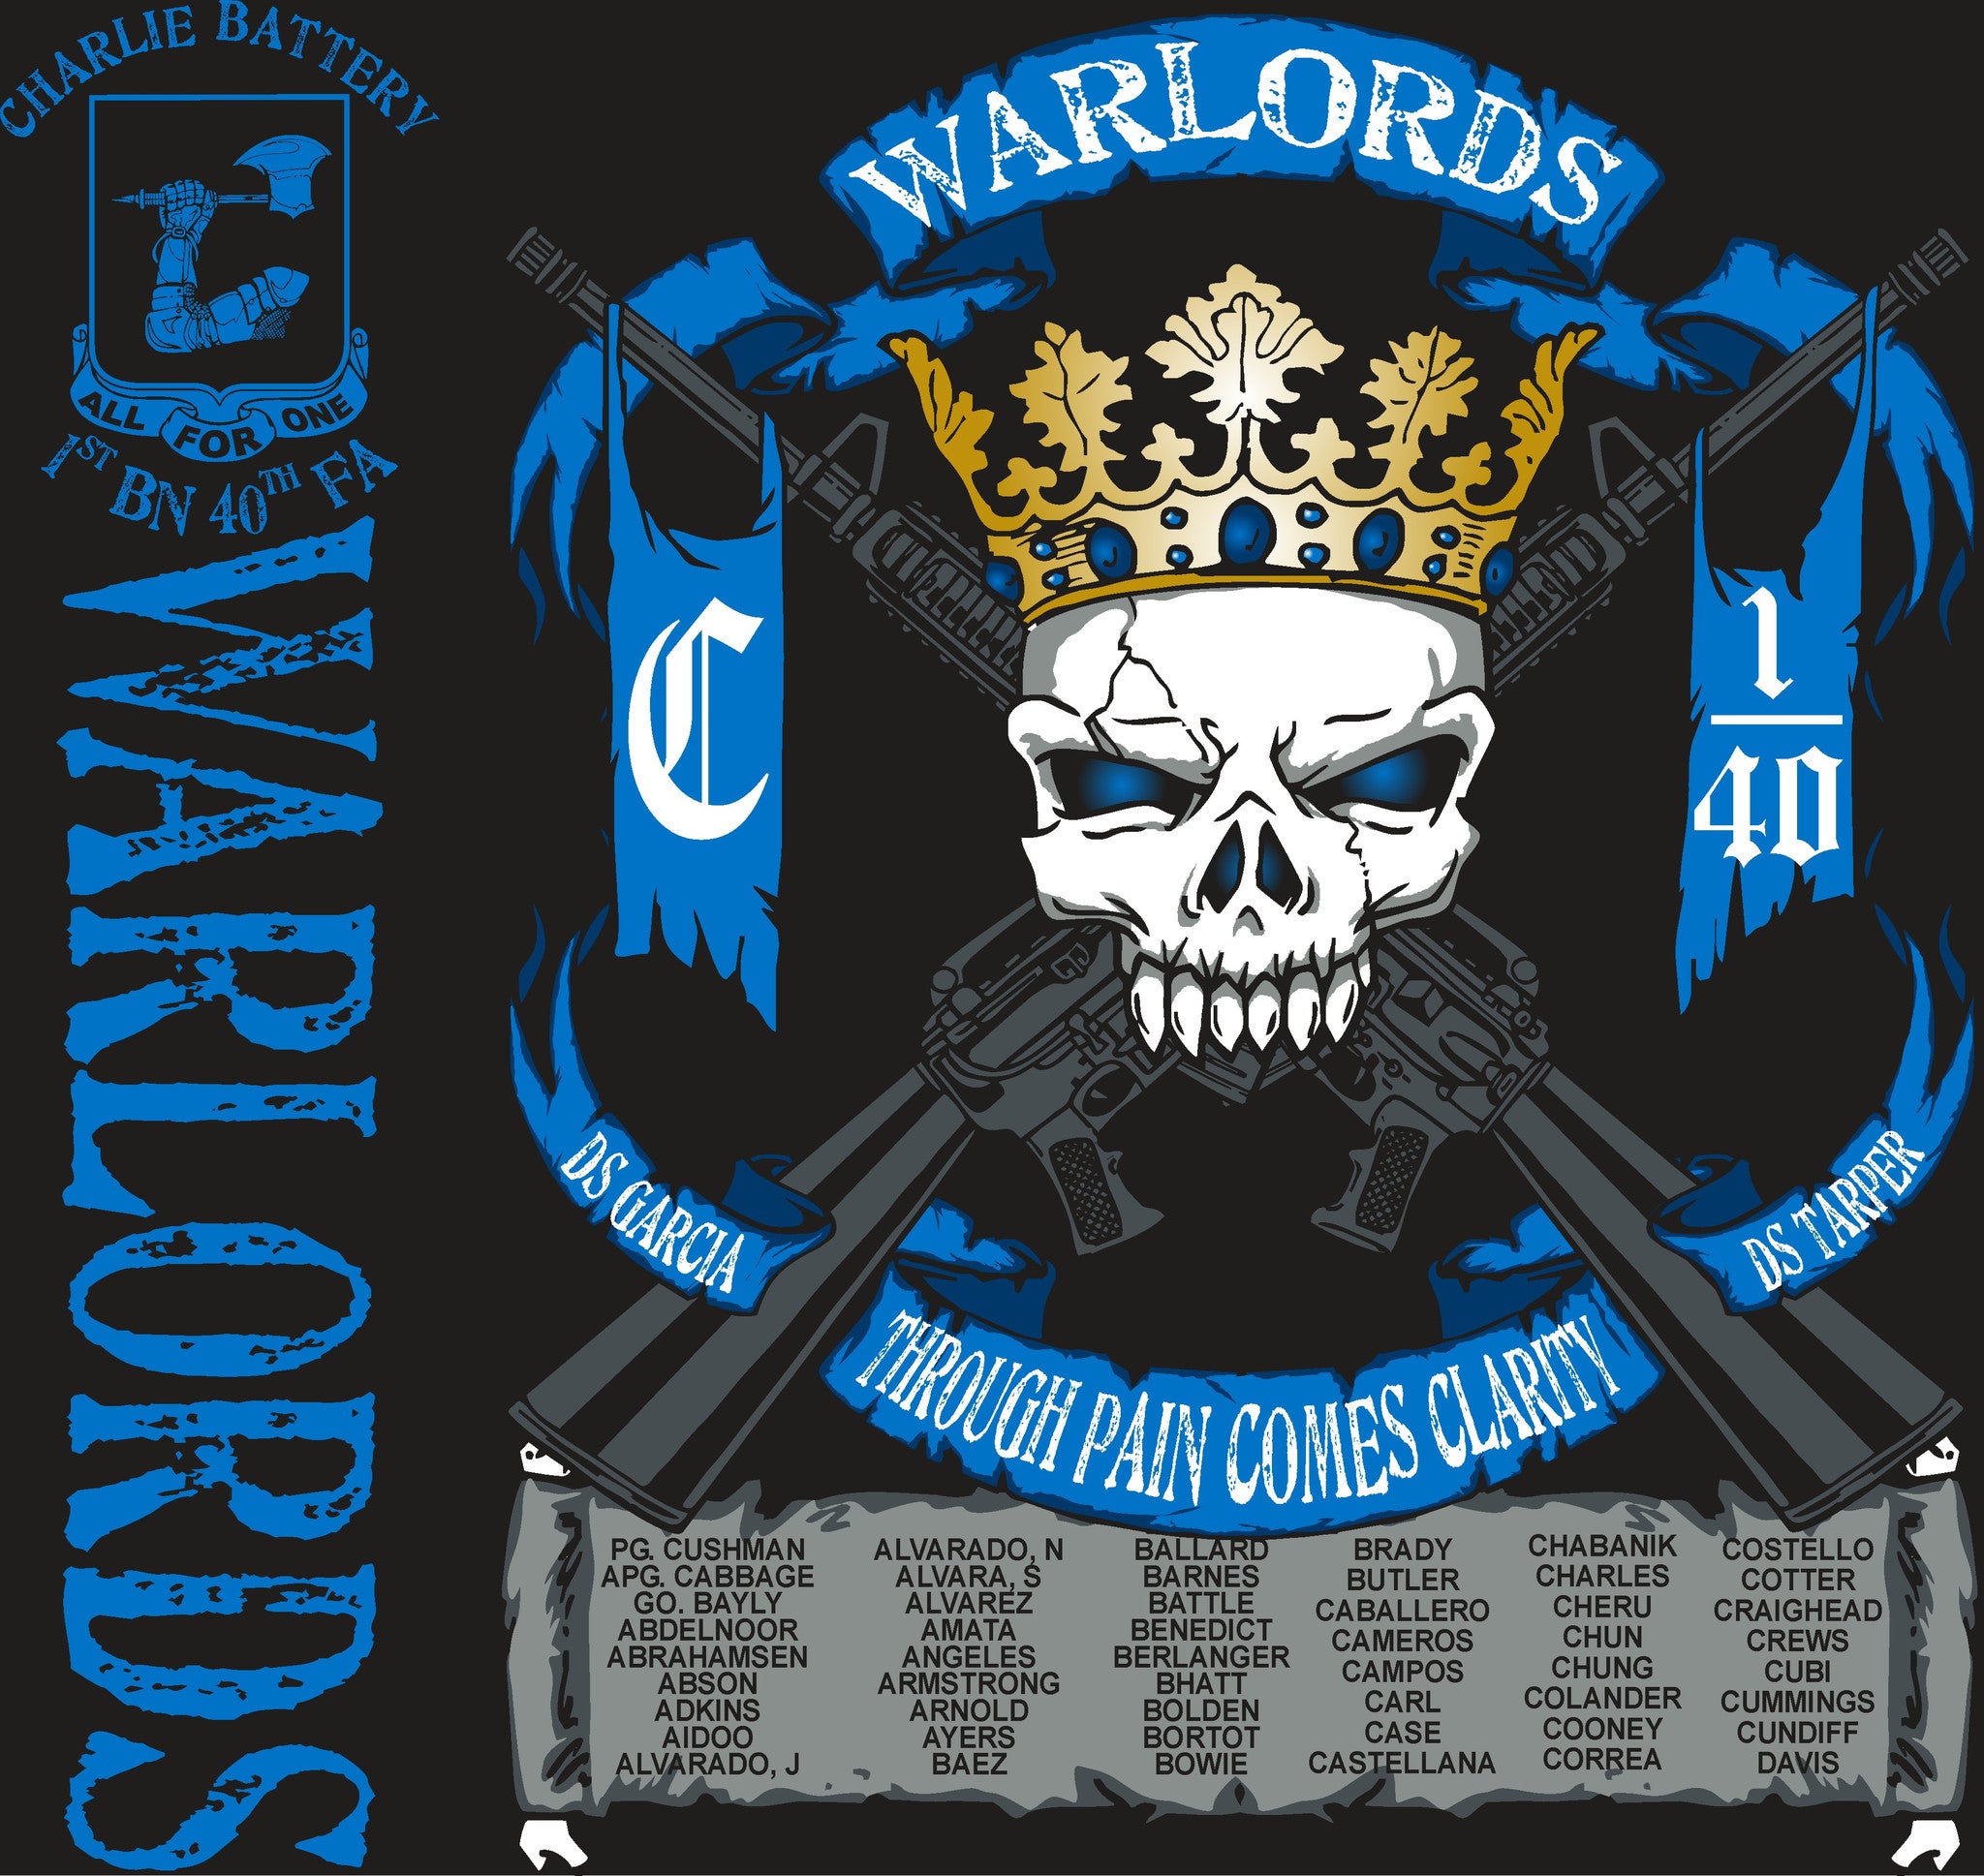 Platoon Shirts CHARLIE 1st 40th WARLORDS APR 2015